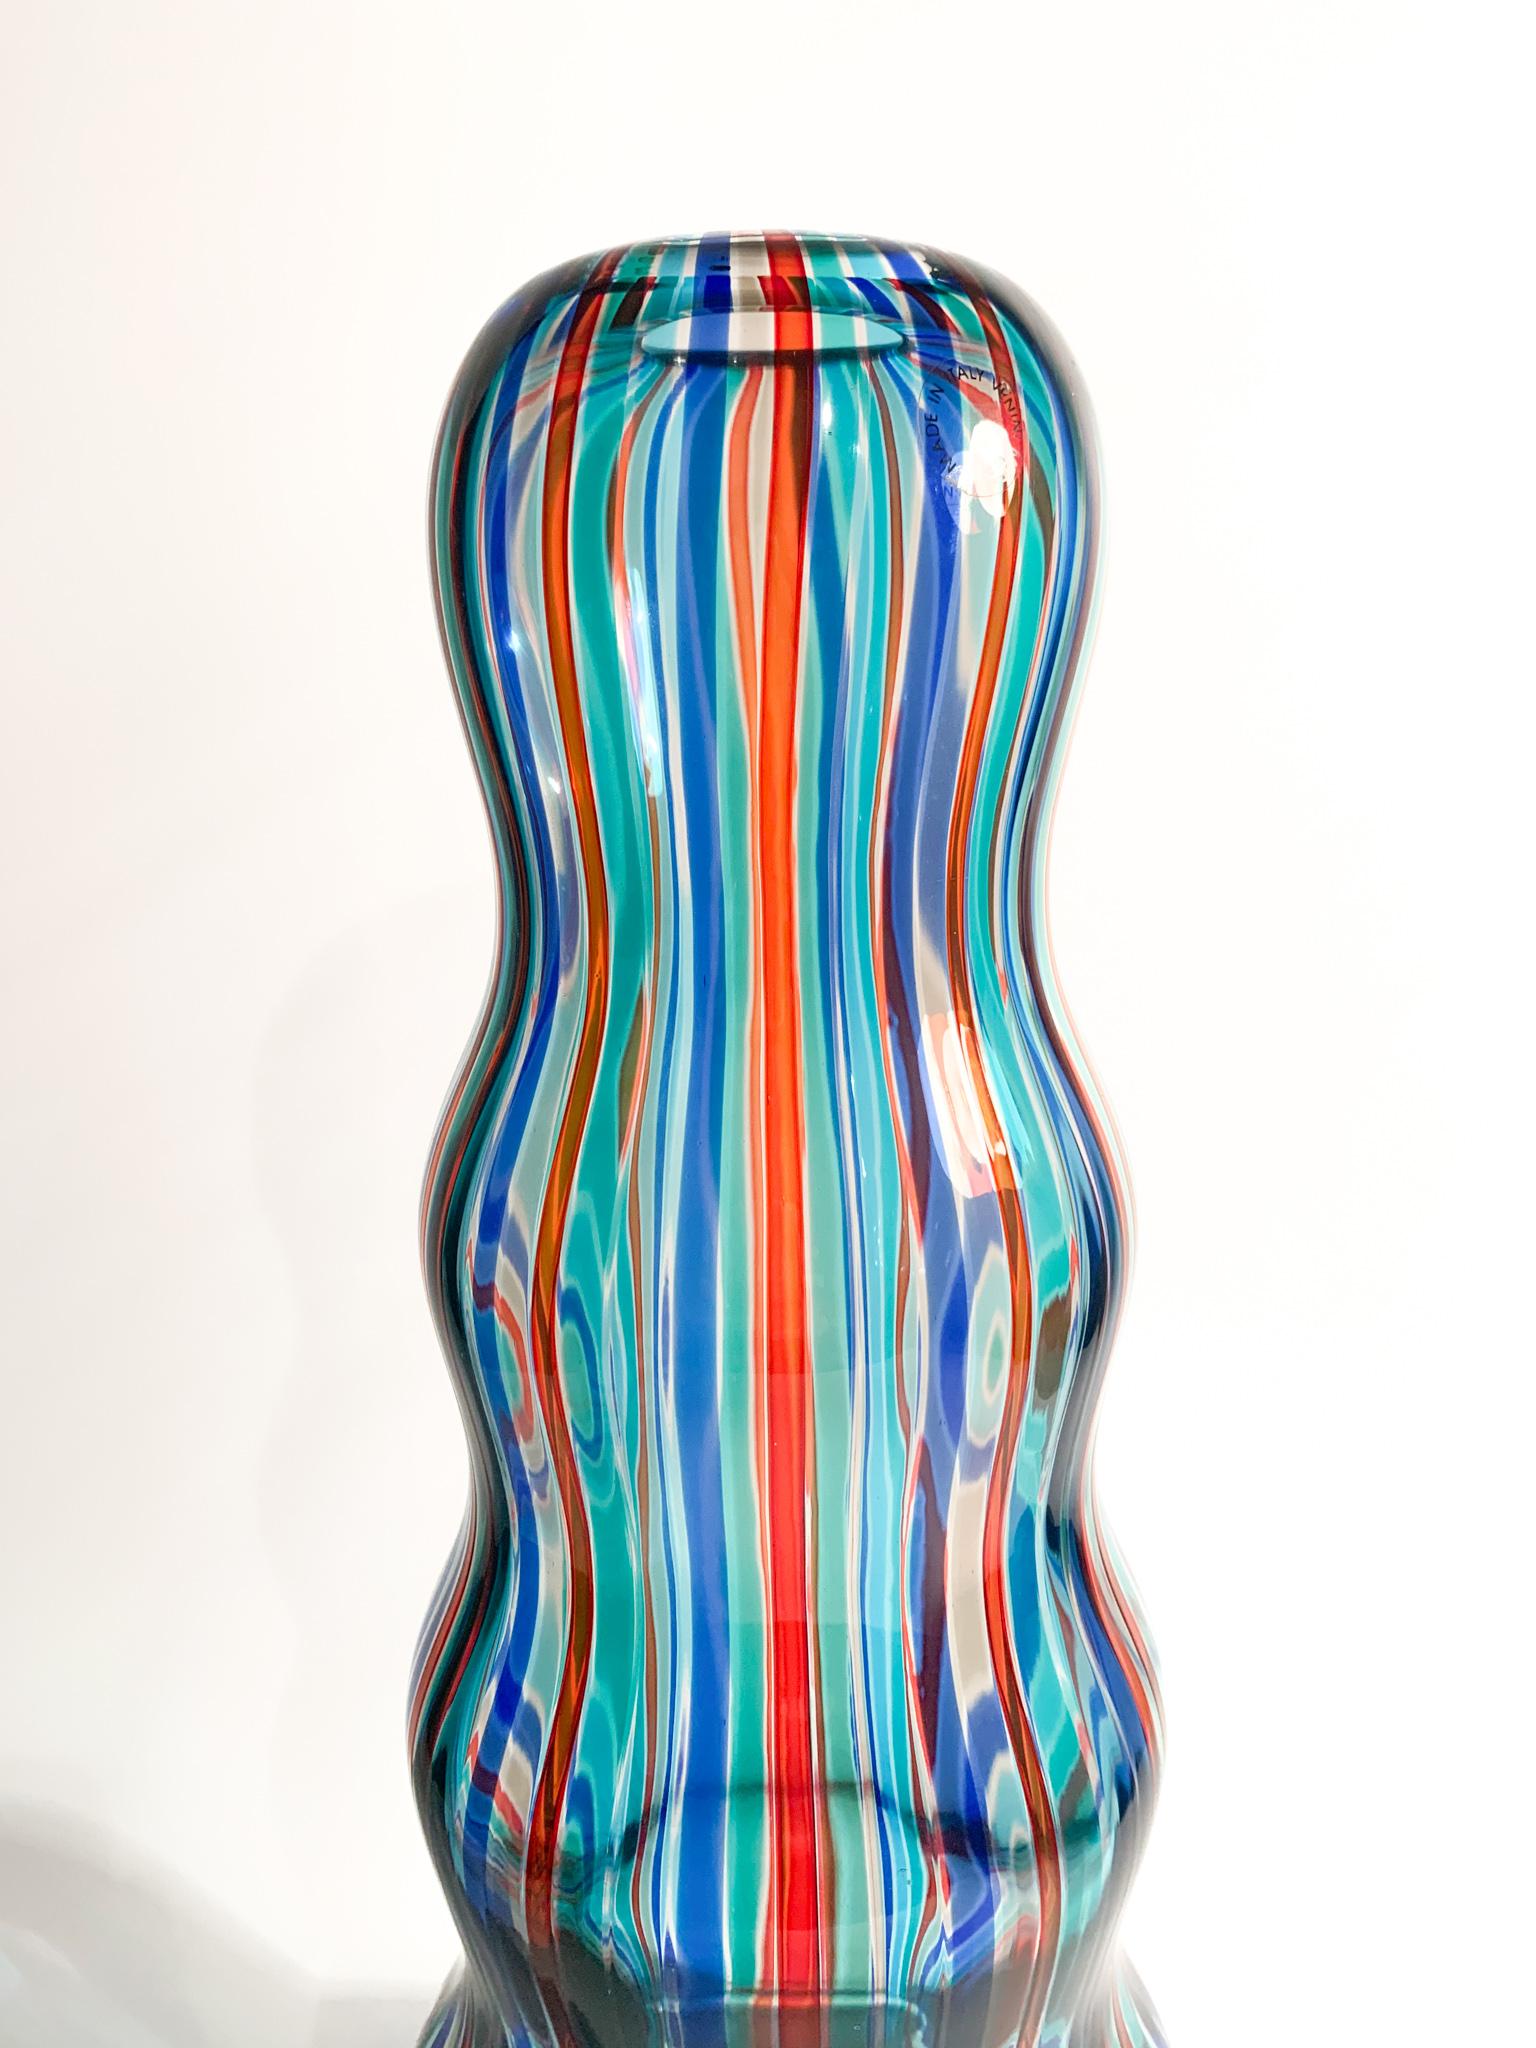 Mid-Century Modern 'Arado' Vase by Alessandro Mendini for Venini from 1988 For Sale